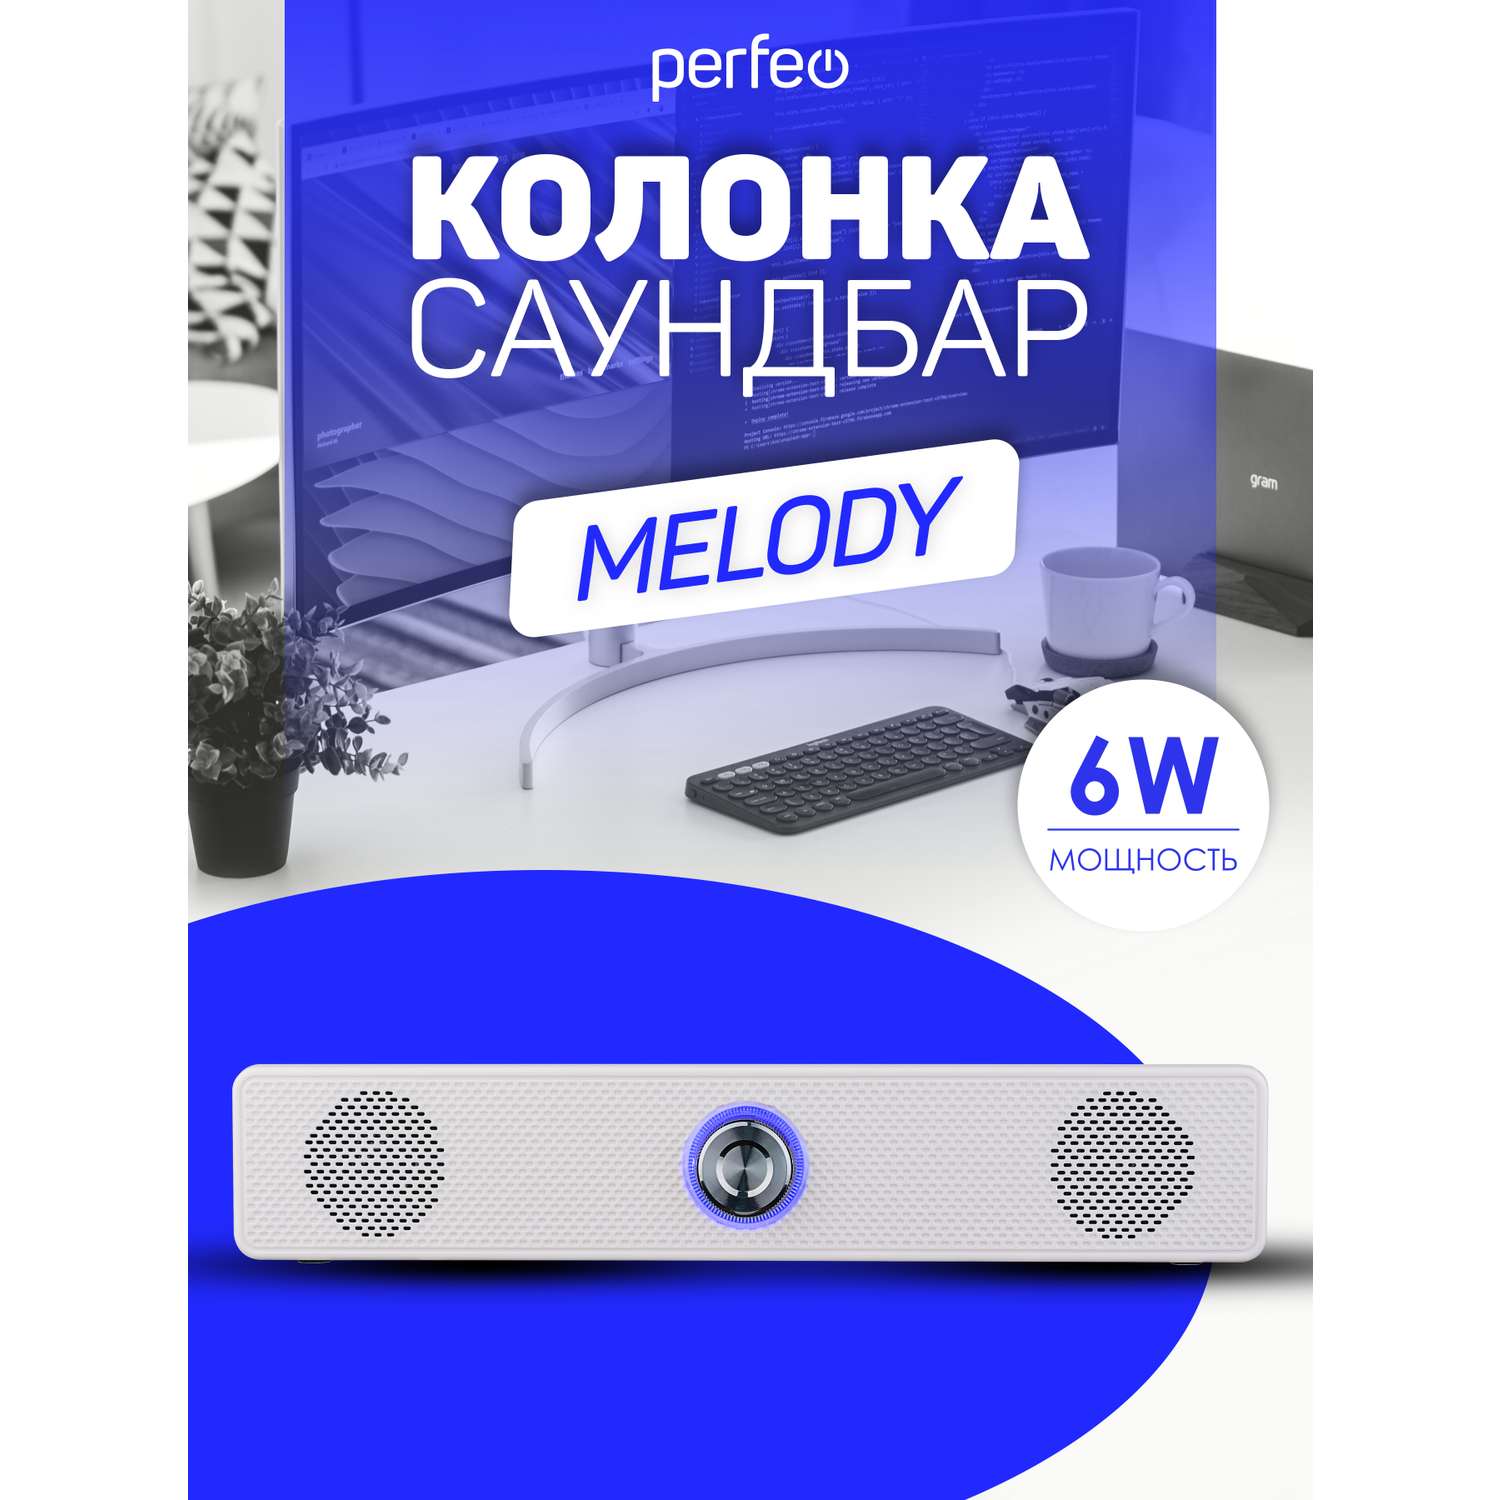 Колонка-саундбар Perfeo компьютерная MELODY мощность 6 Вт USB пластик белый - фото 1